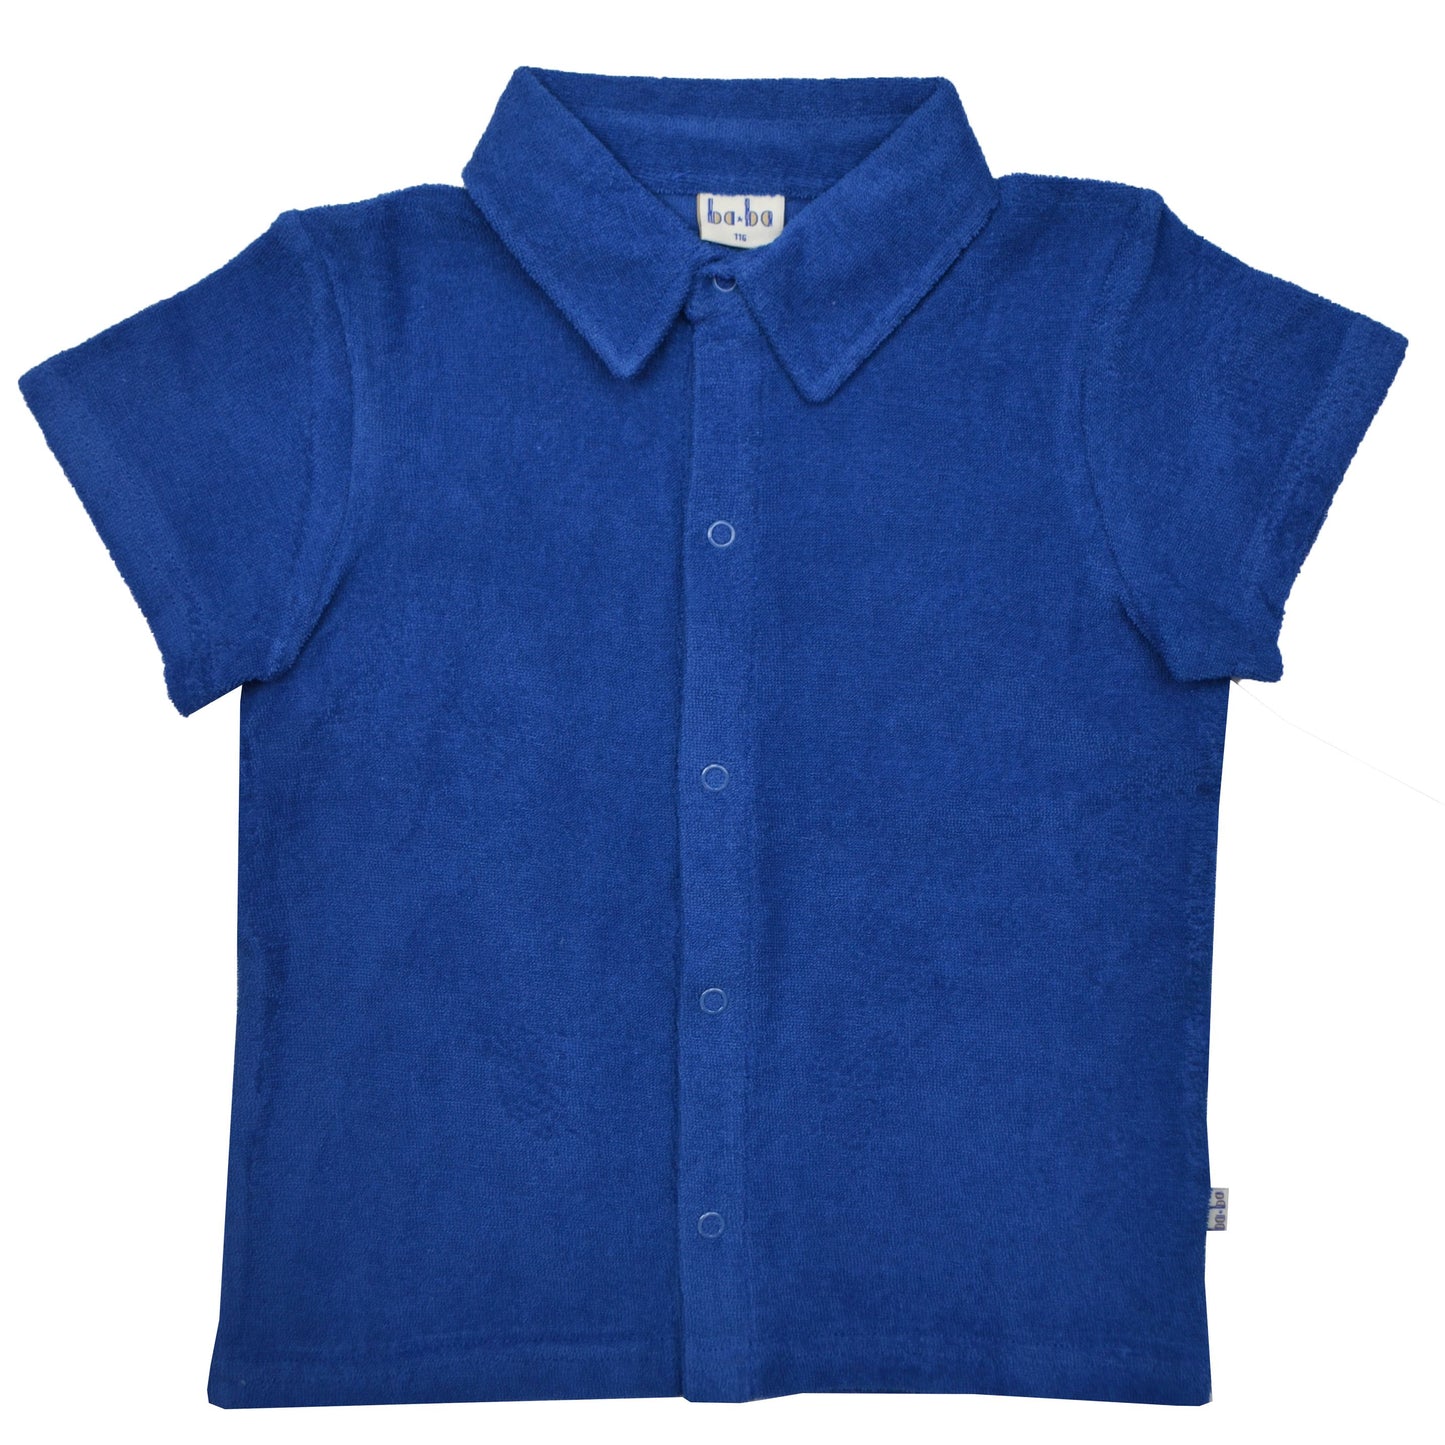 Boys Shirt Short Sleeves - Terry True Blue S23